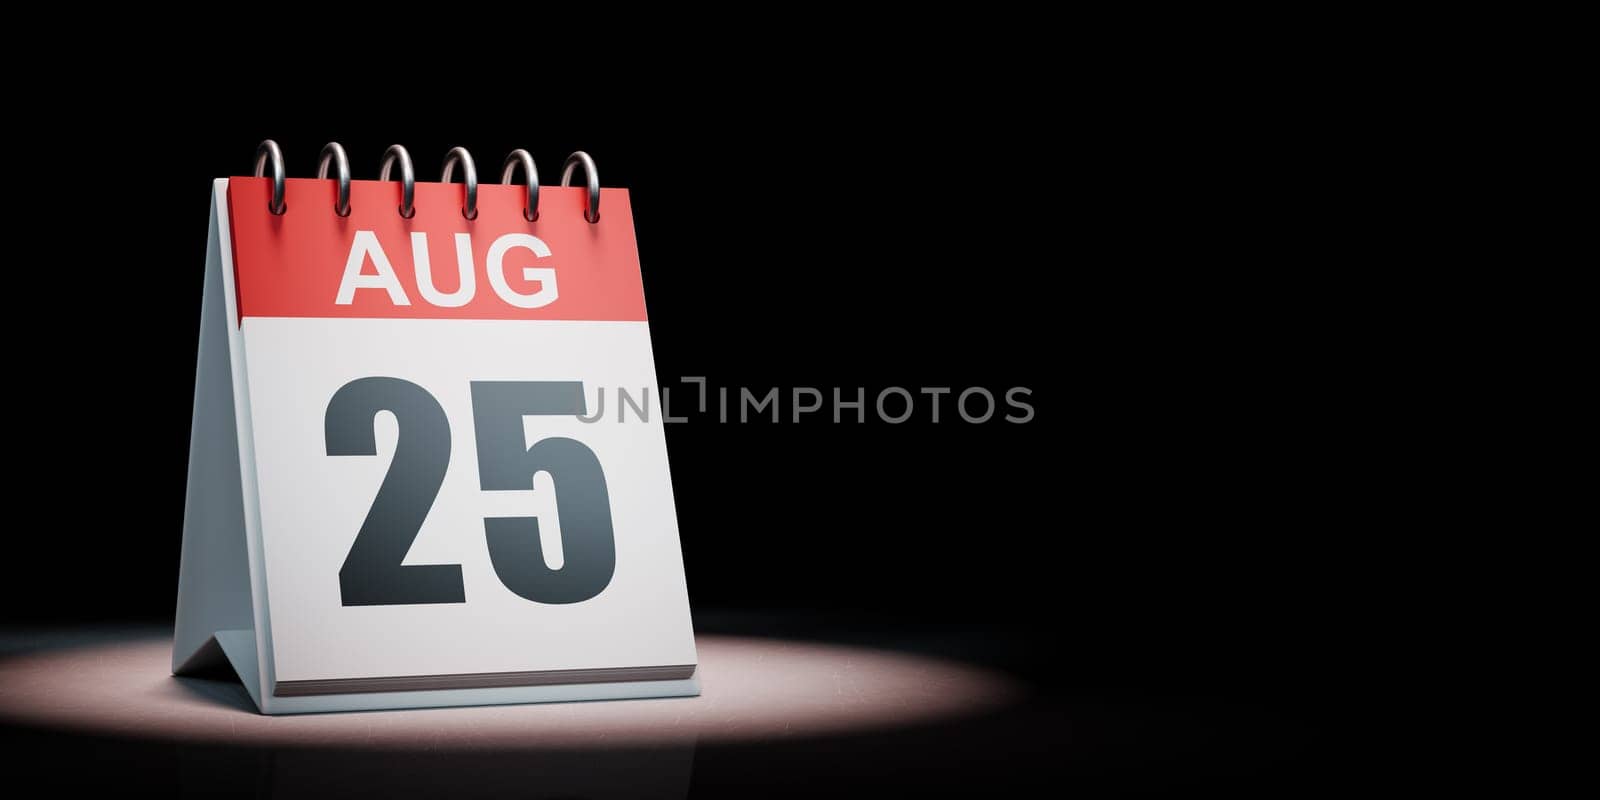 August 25 Calendar Spotlighted on Black Background by make